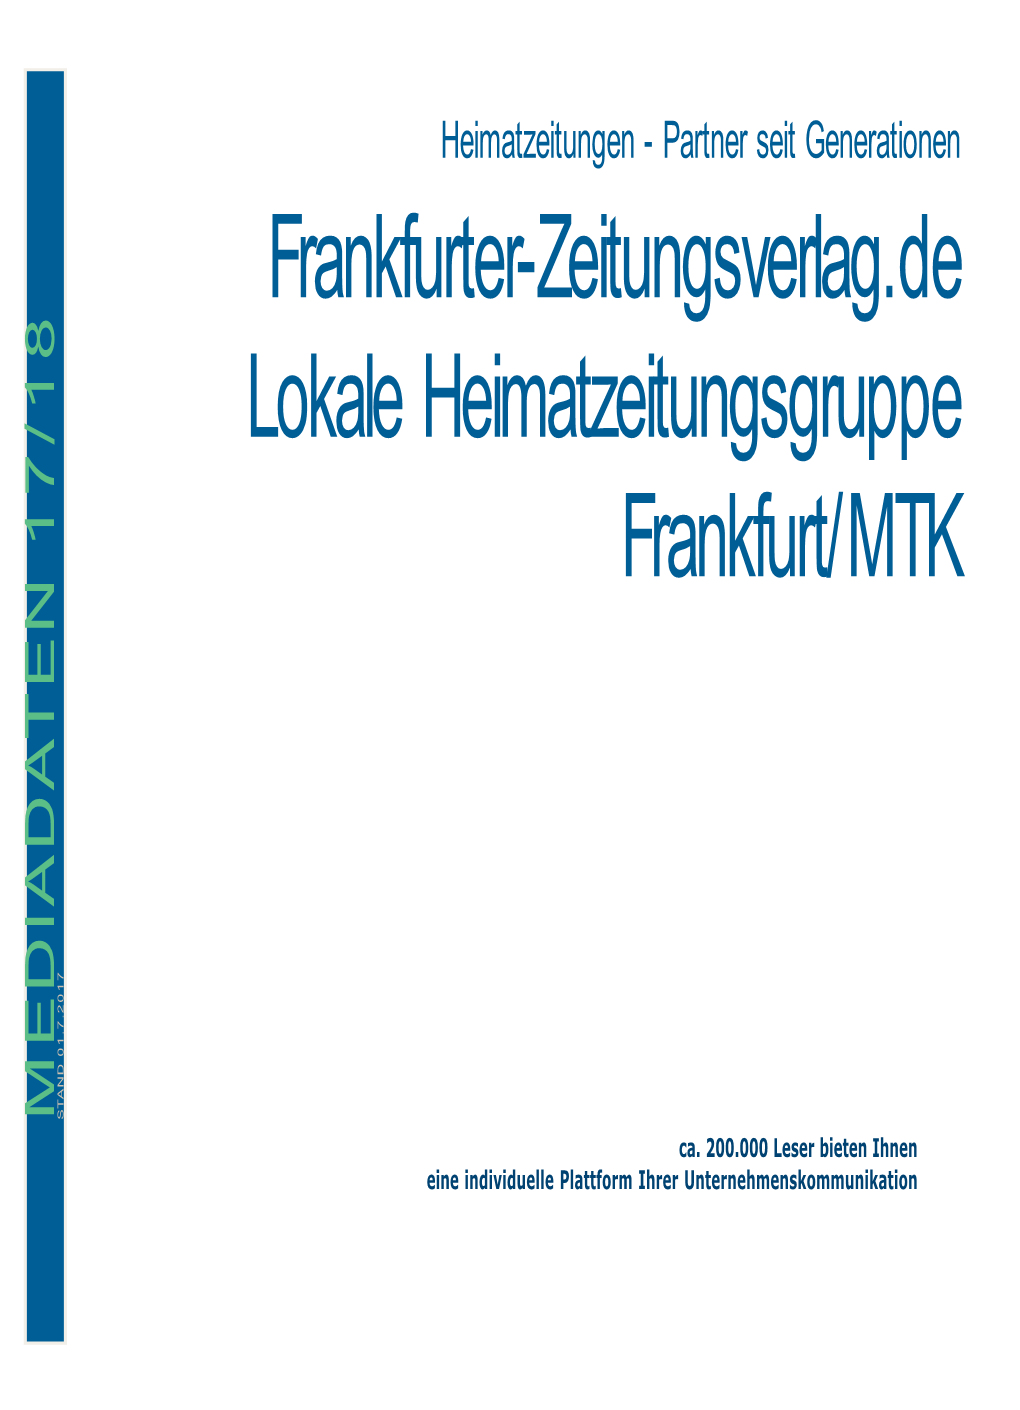 Frankfurter-Zeitungsverlag.De Lokale Heimatzeitungsgruppe Frankfurt/MTK